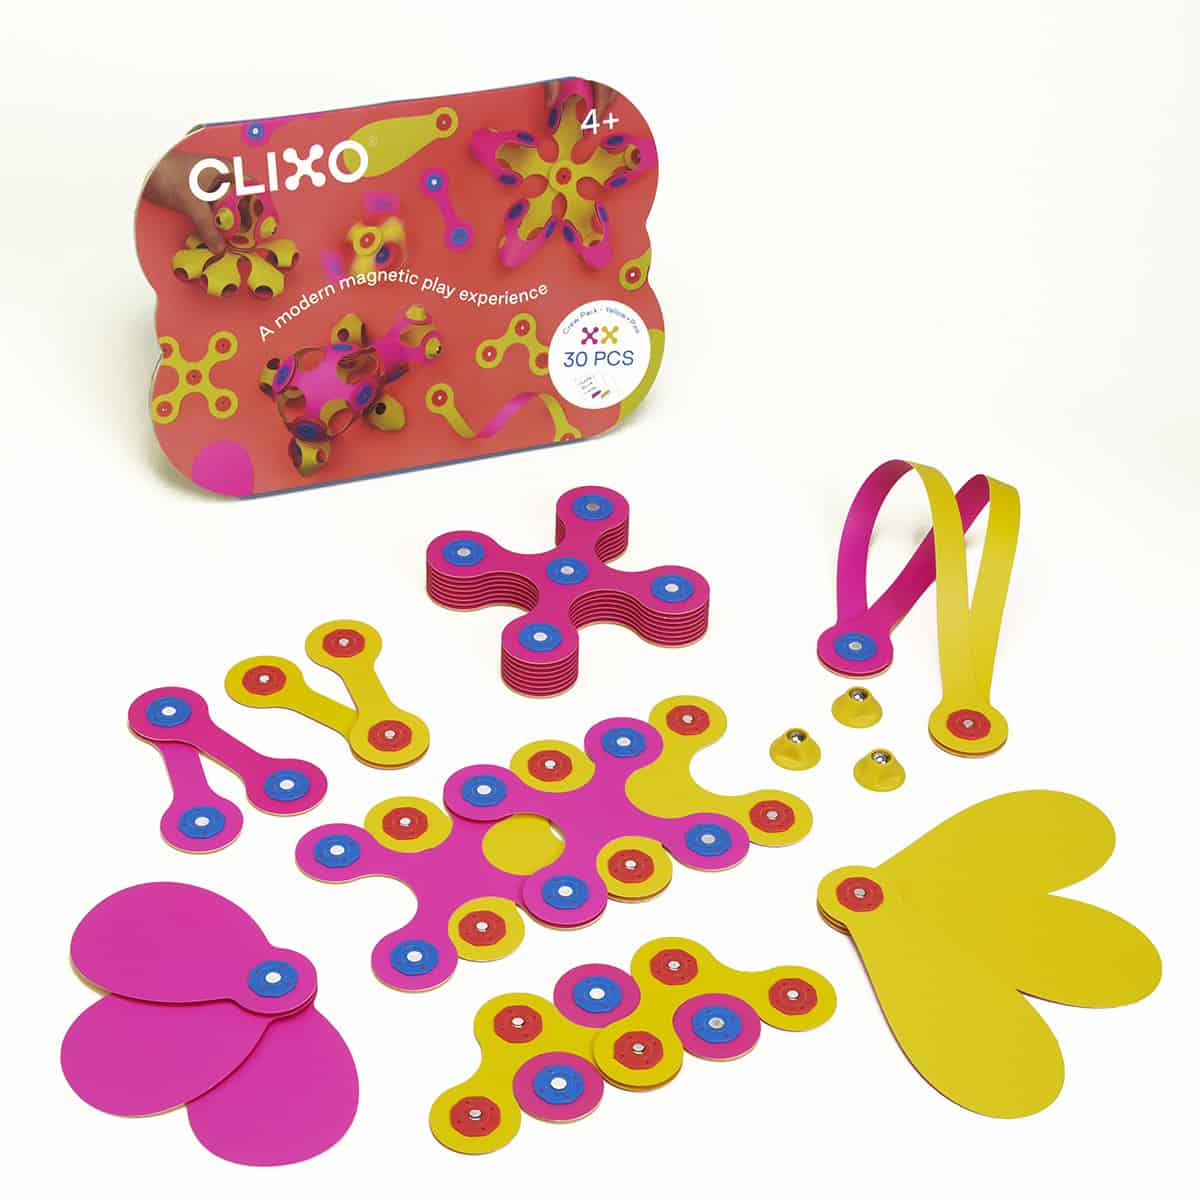 Clixo-5876595-Crew-pinkgelb